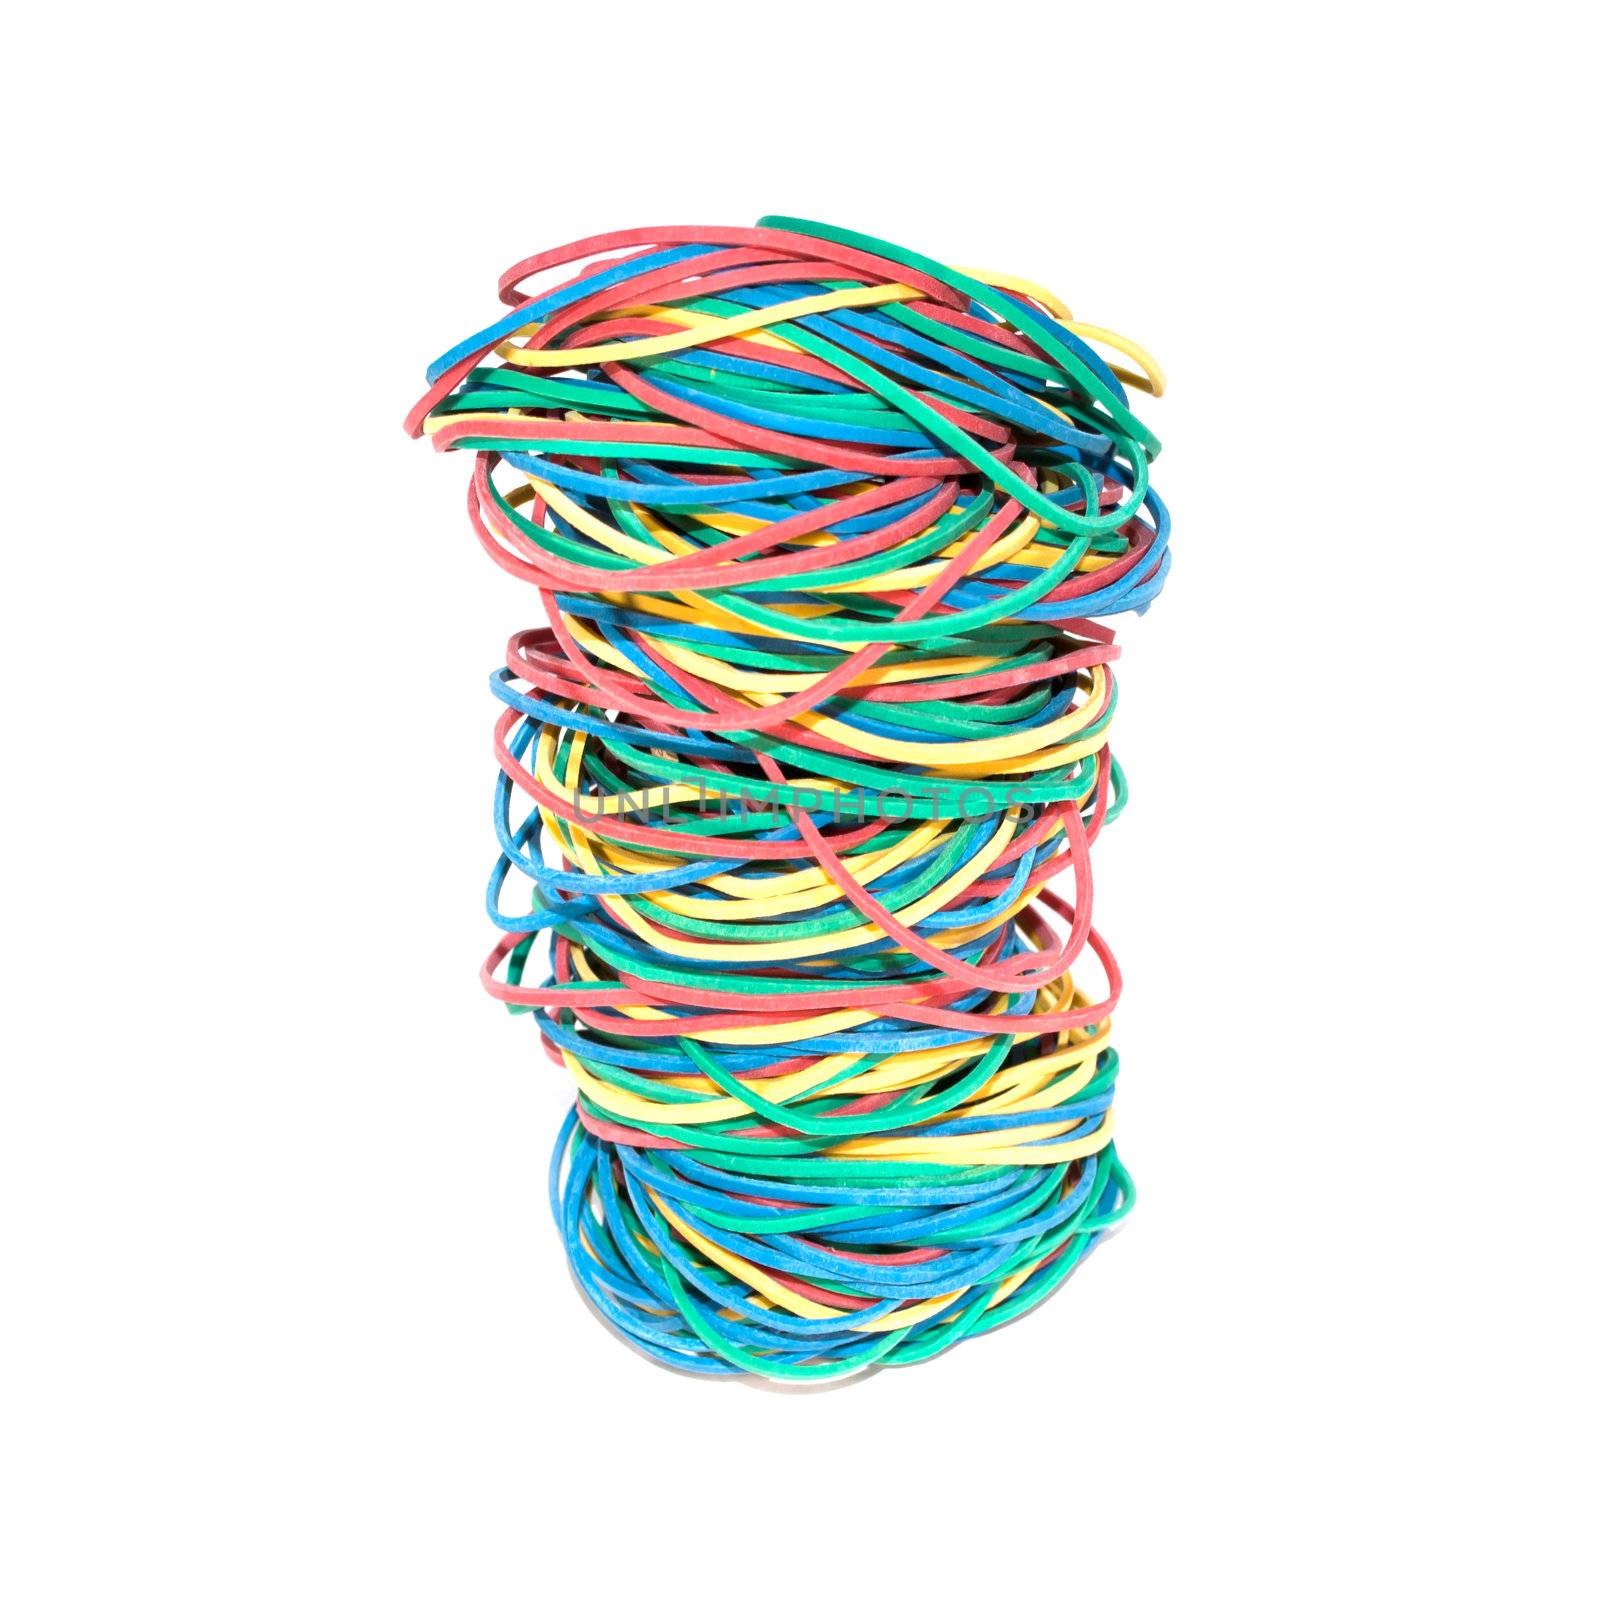 Set of multi-coloured elastic bands close up isolated on white